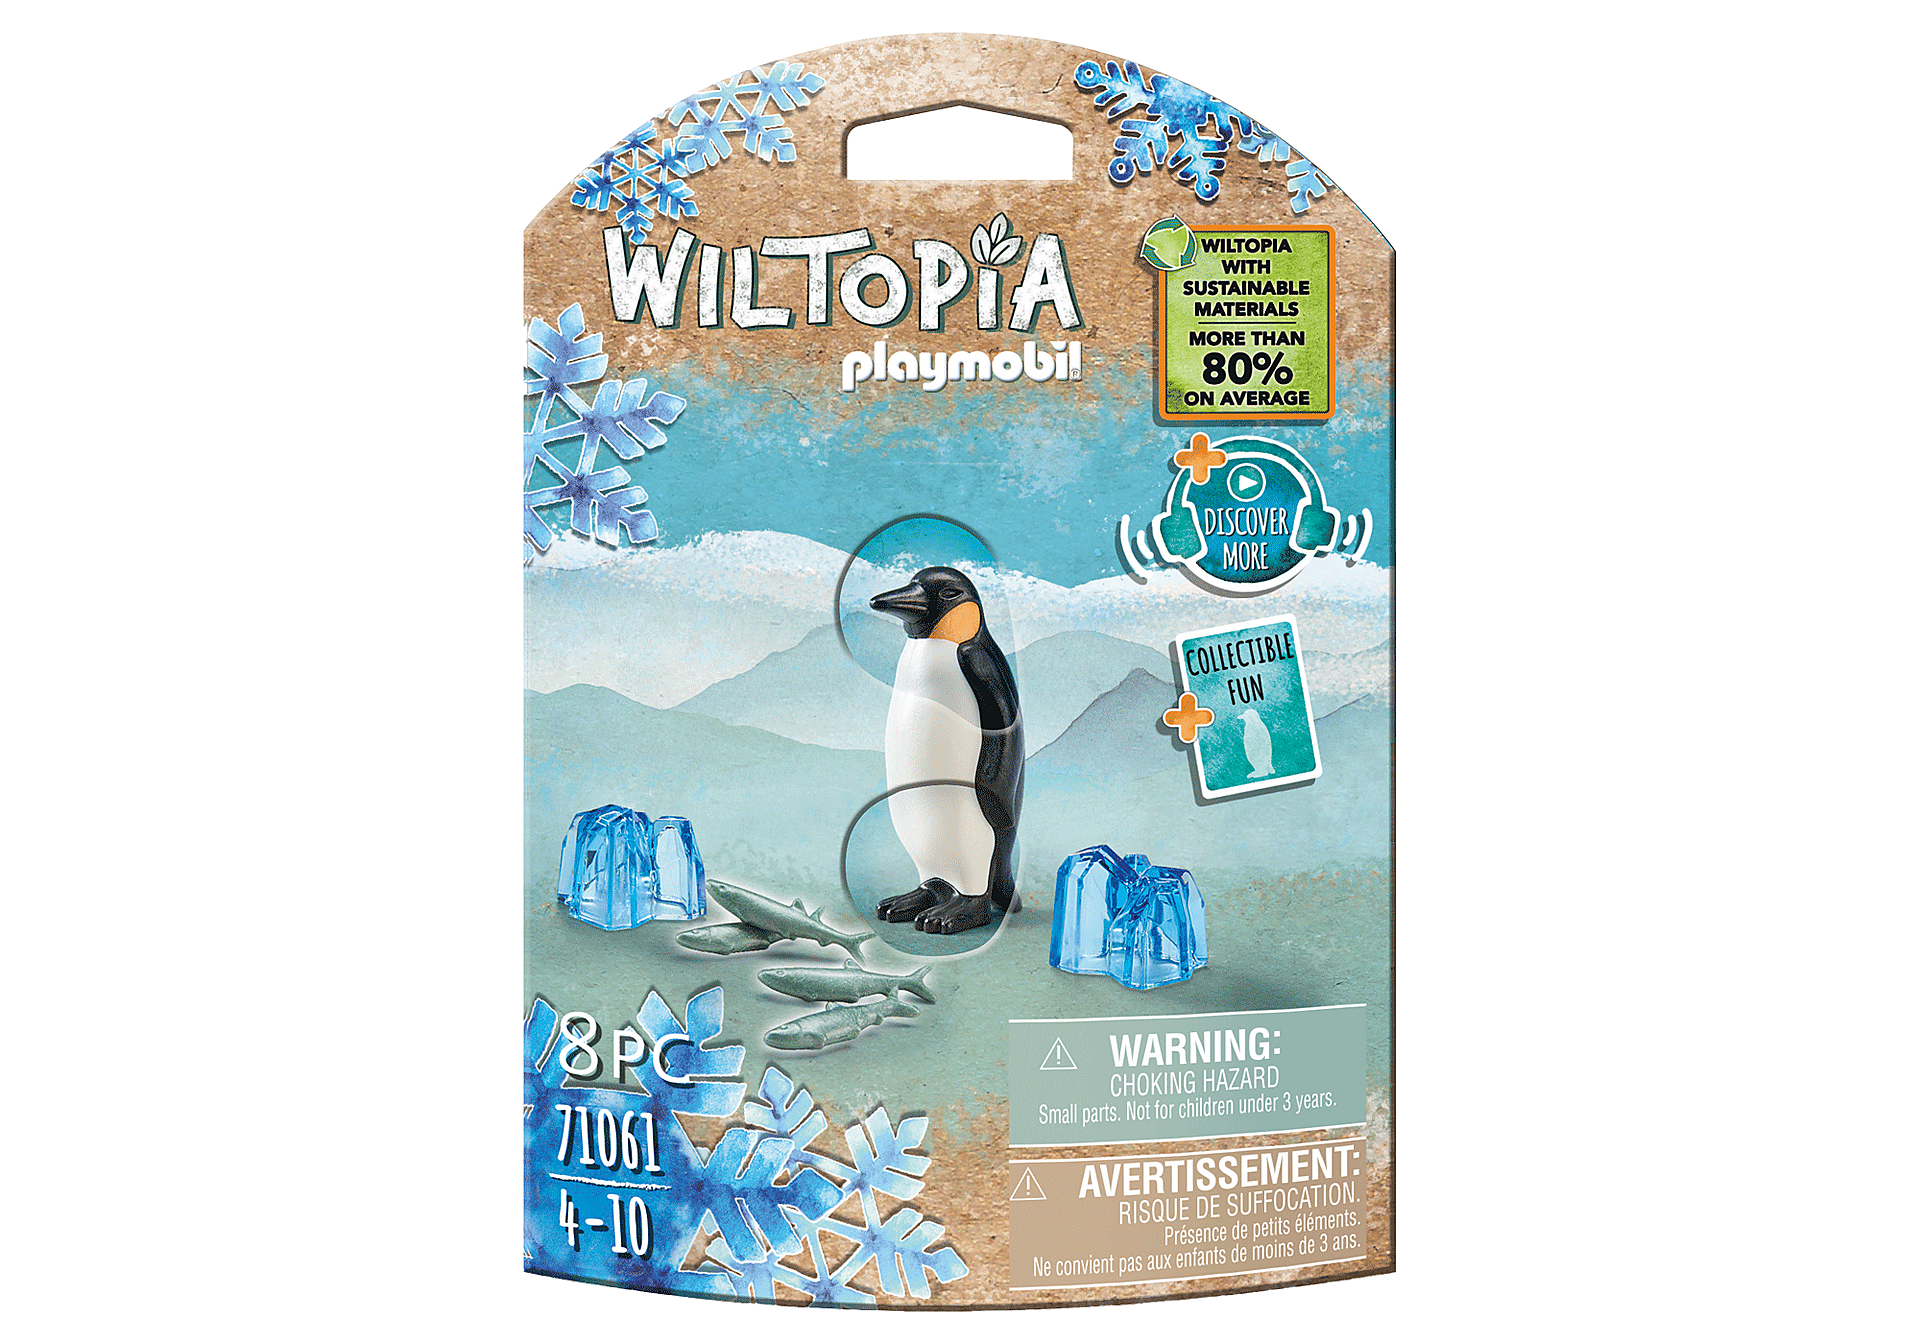 71061 Wiltopia - Emperor Penguin zoom image2